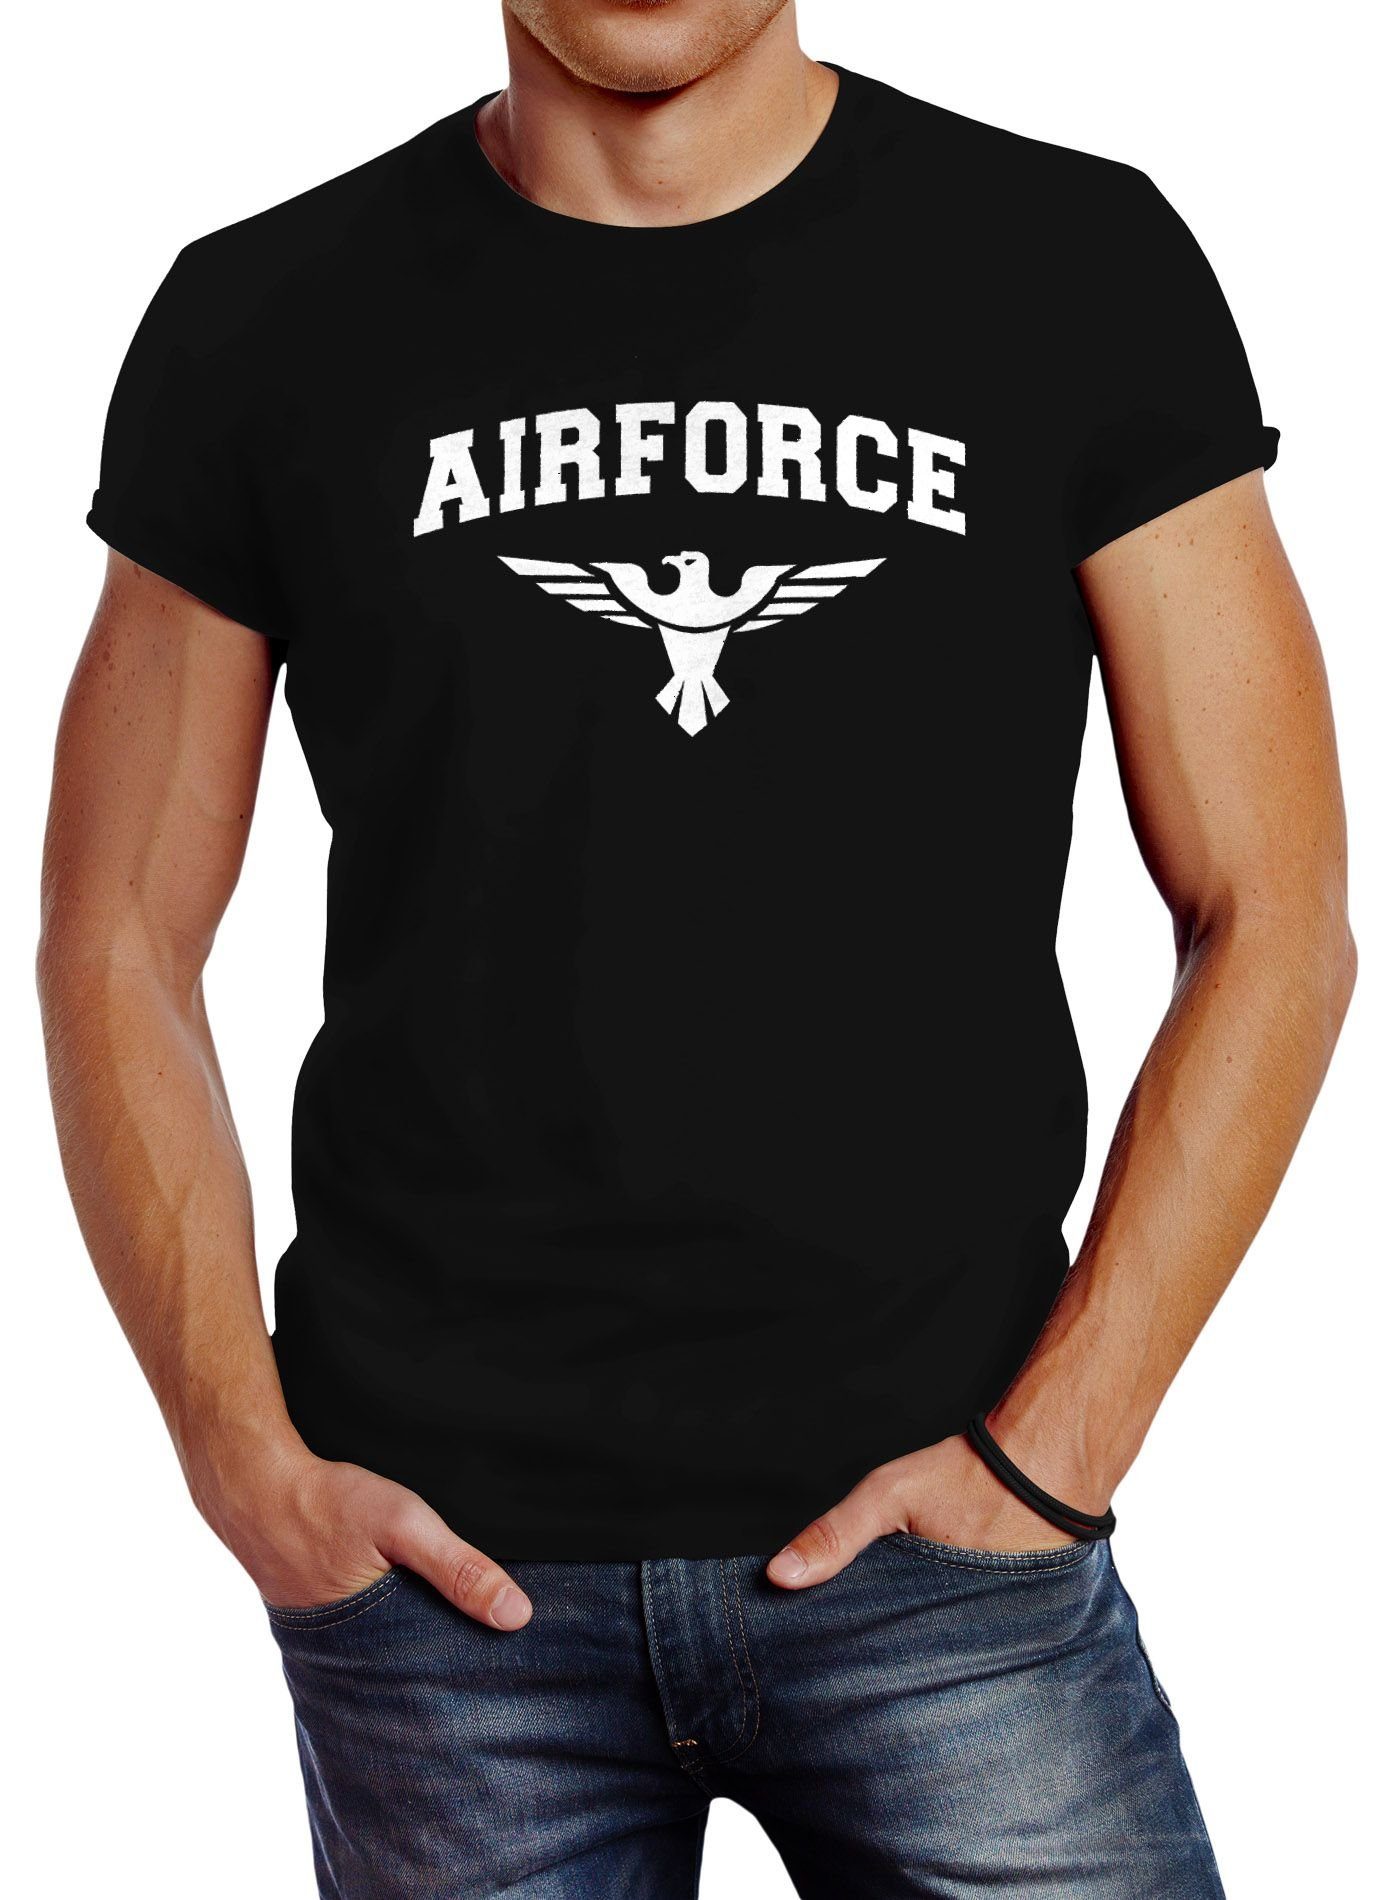 Neverless Print-Shirt Neverless® Herren T-Shirt Airforce US Army Adler Militär T-Shirt Fashion Streetstyle mit Print schwarz